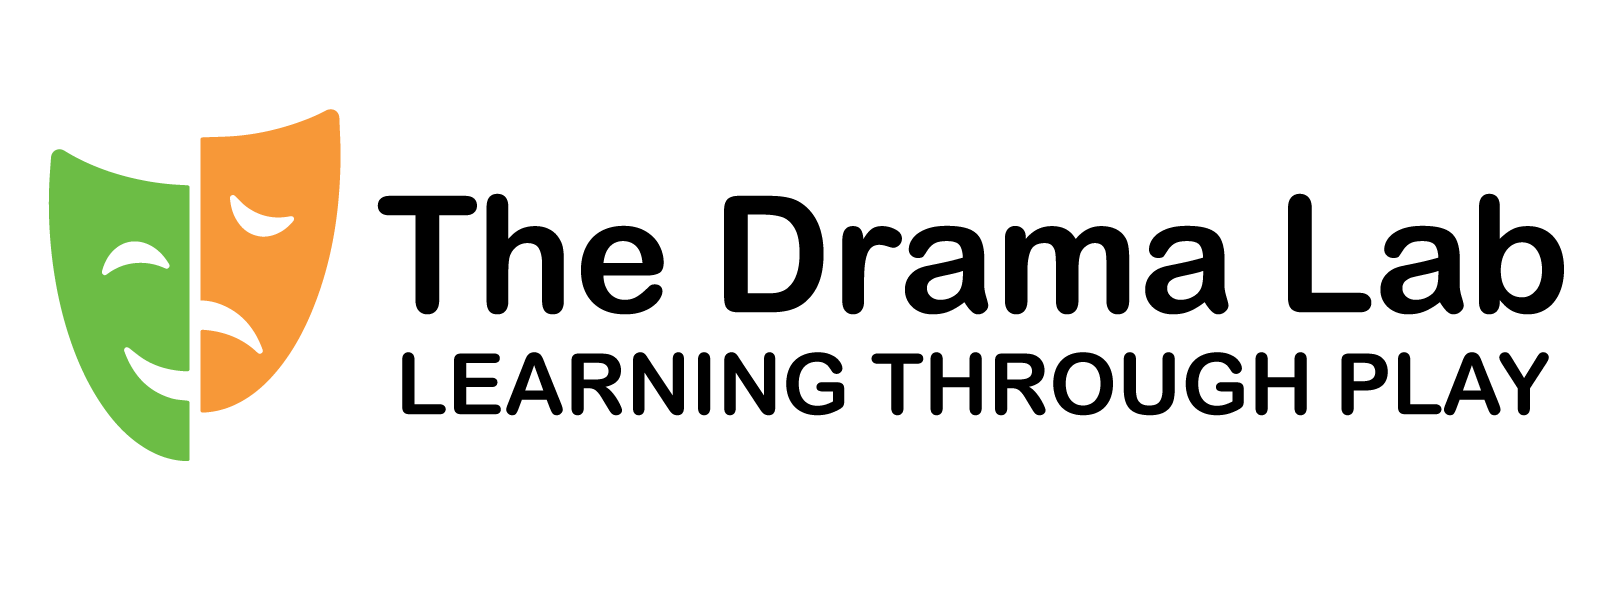 The Drama Lab